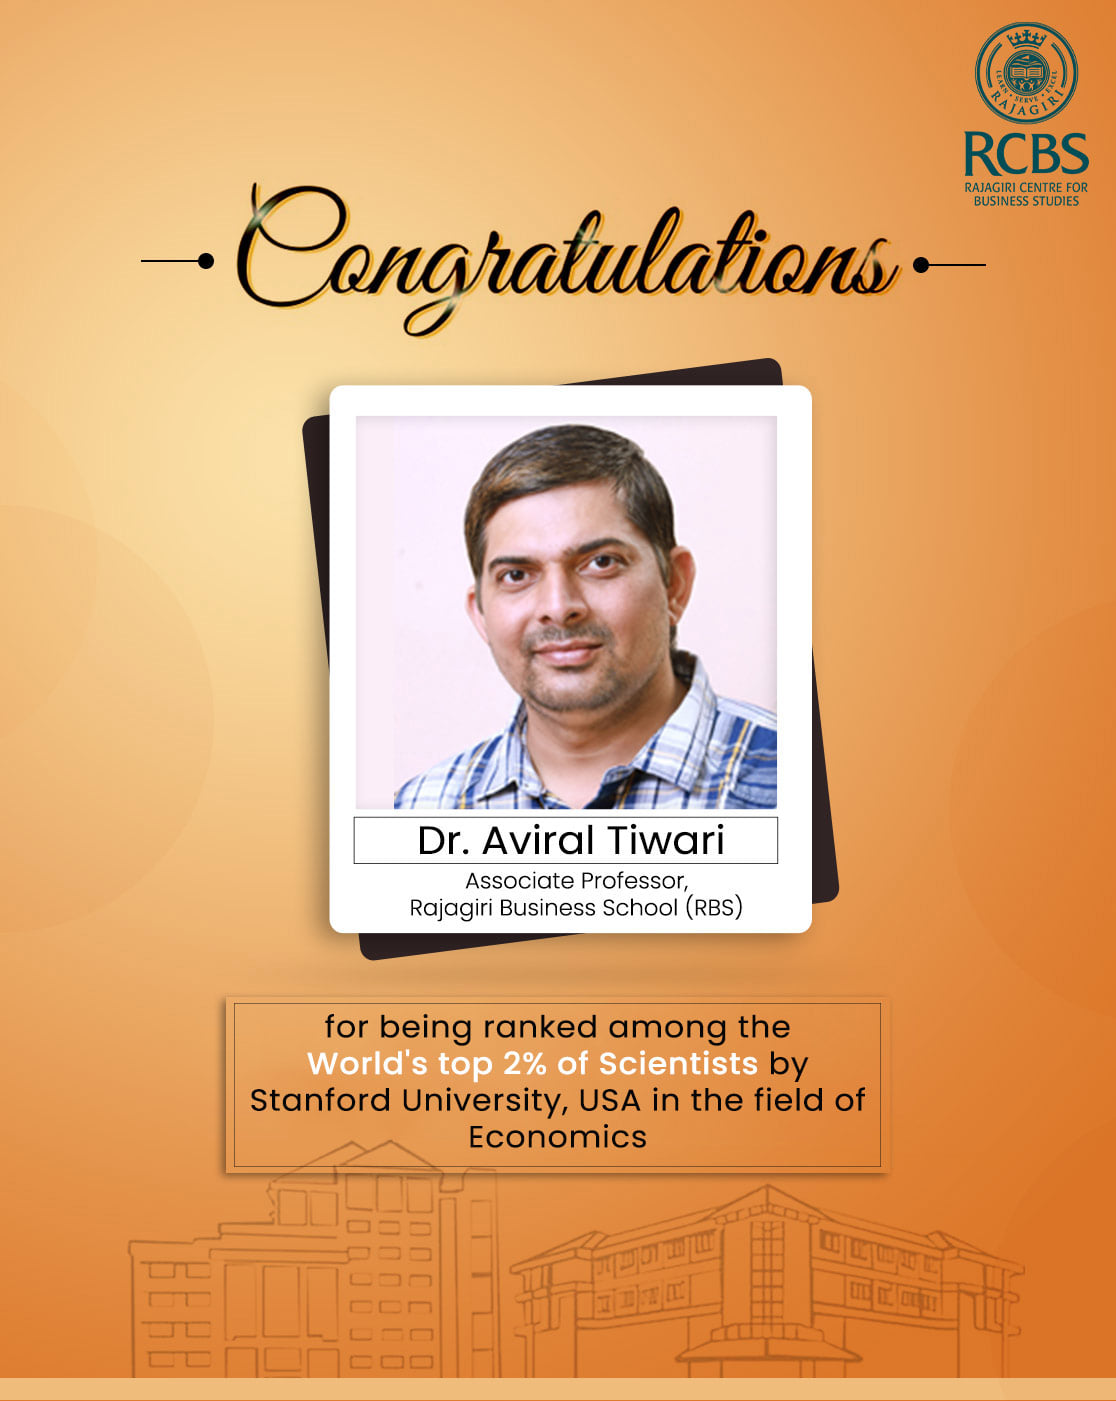 Congratulations Dr. Aviral Tiwari